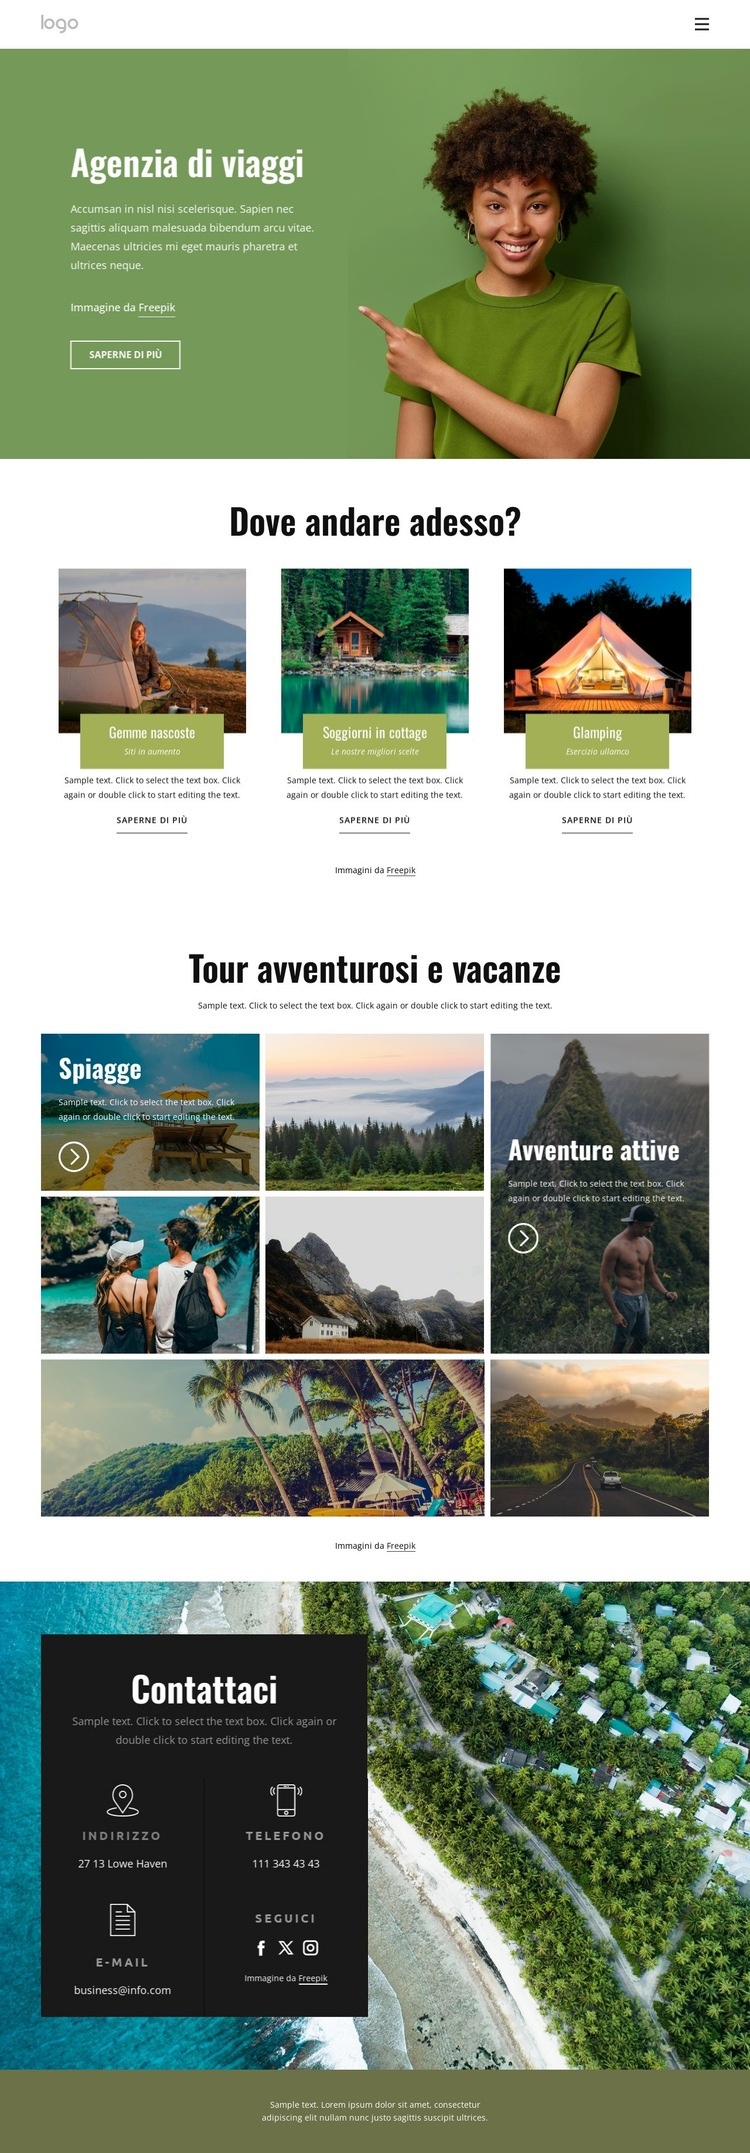 Tour avventurosi e vacanze Pagina di destinazione